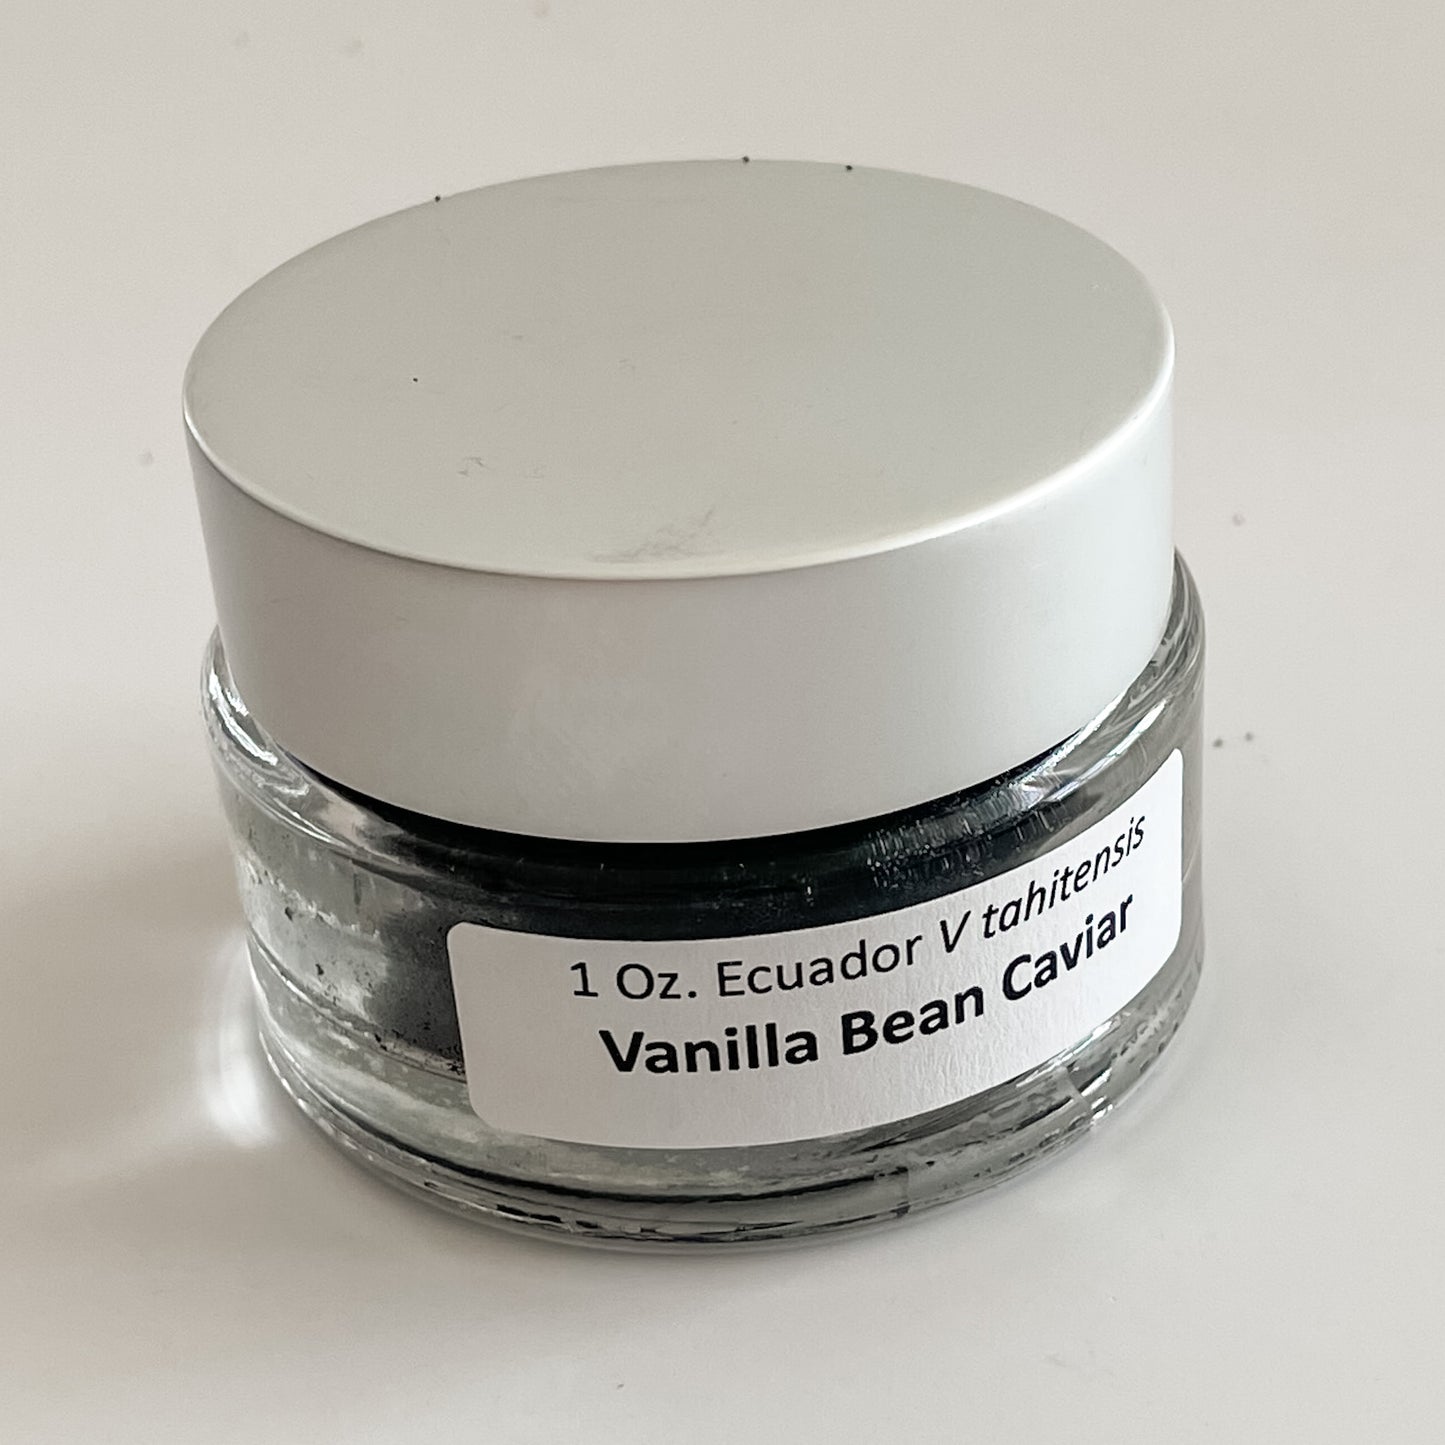 Vanilla Bean Caviar